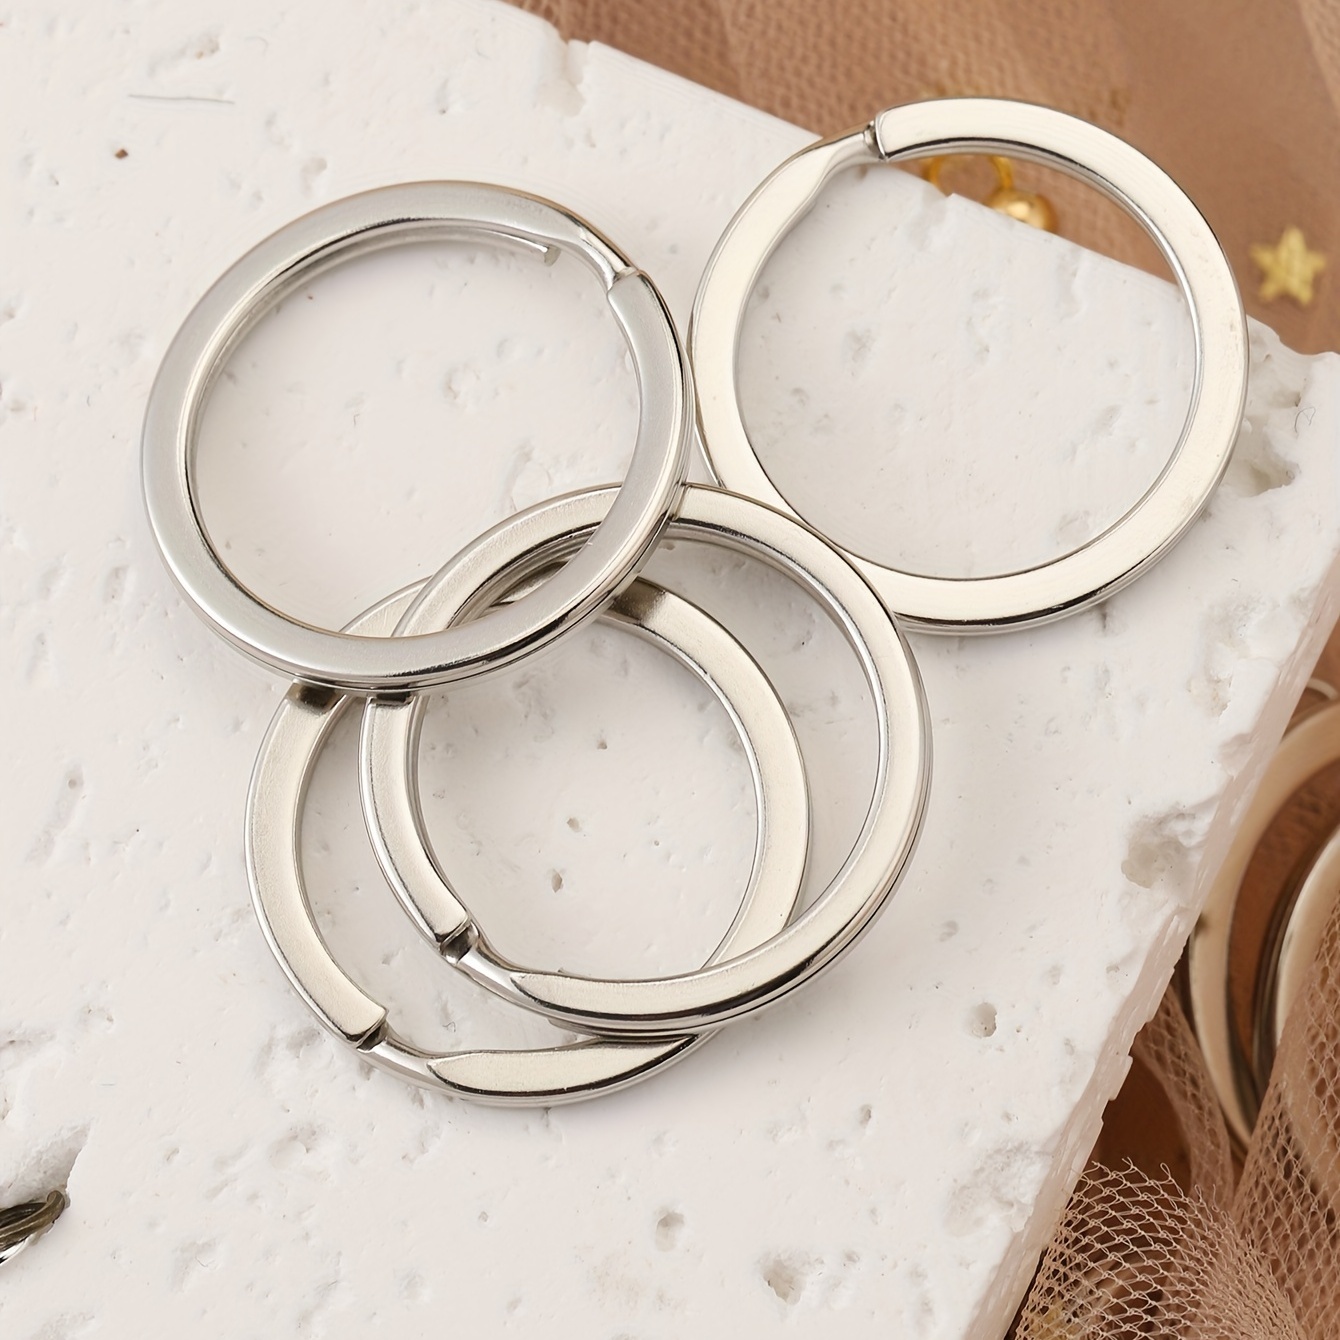 100 Pcs Split Ring Small Key Rings Bulk Split Keychain Rings DIY Craft Metal